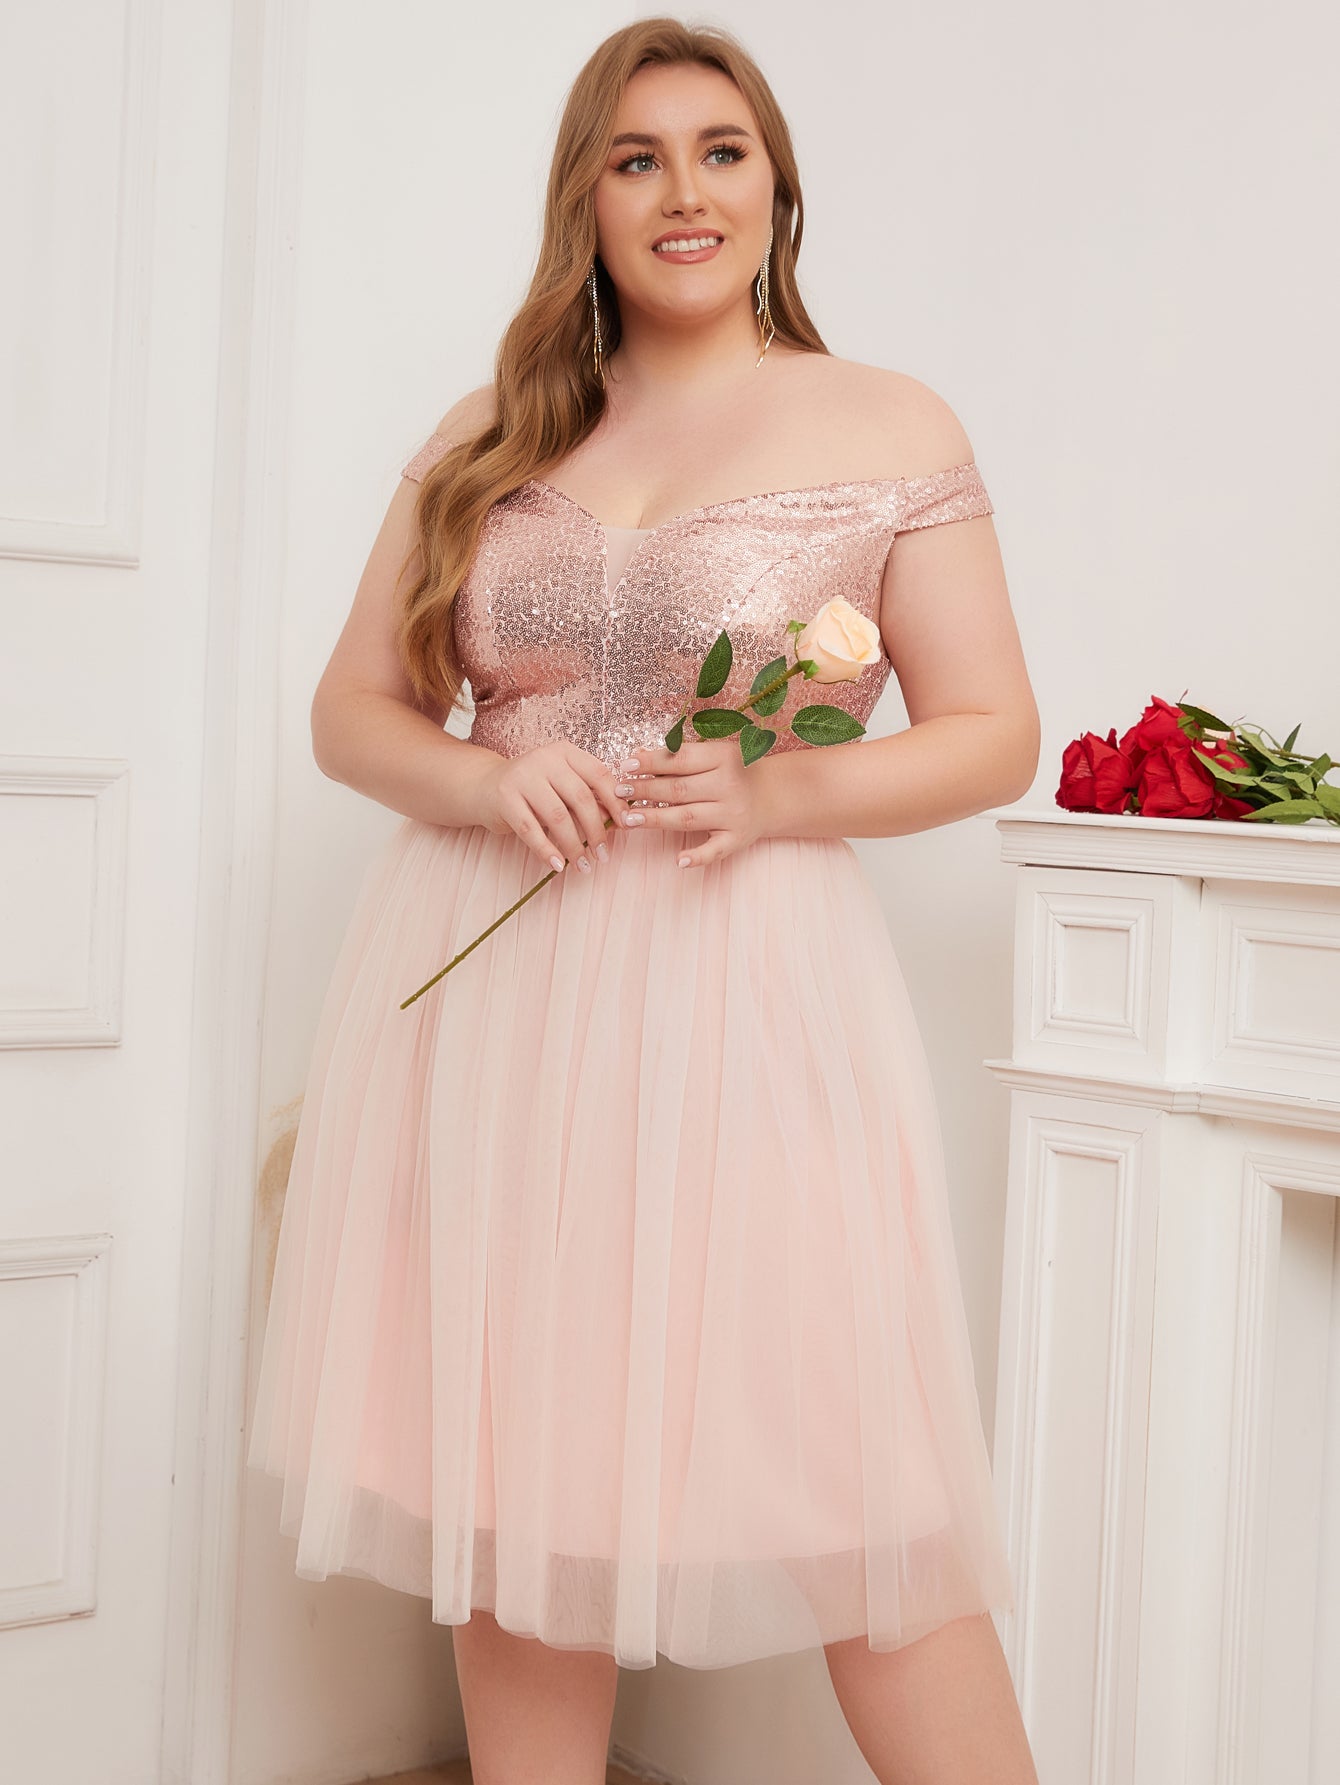 Women Plus Size Cocktail Dresses For Wedding Guest Elegant Party Gowns